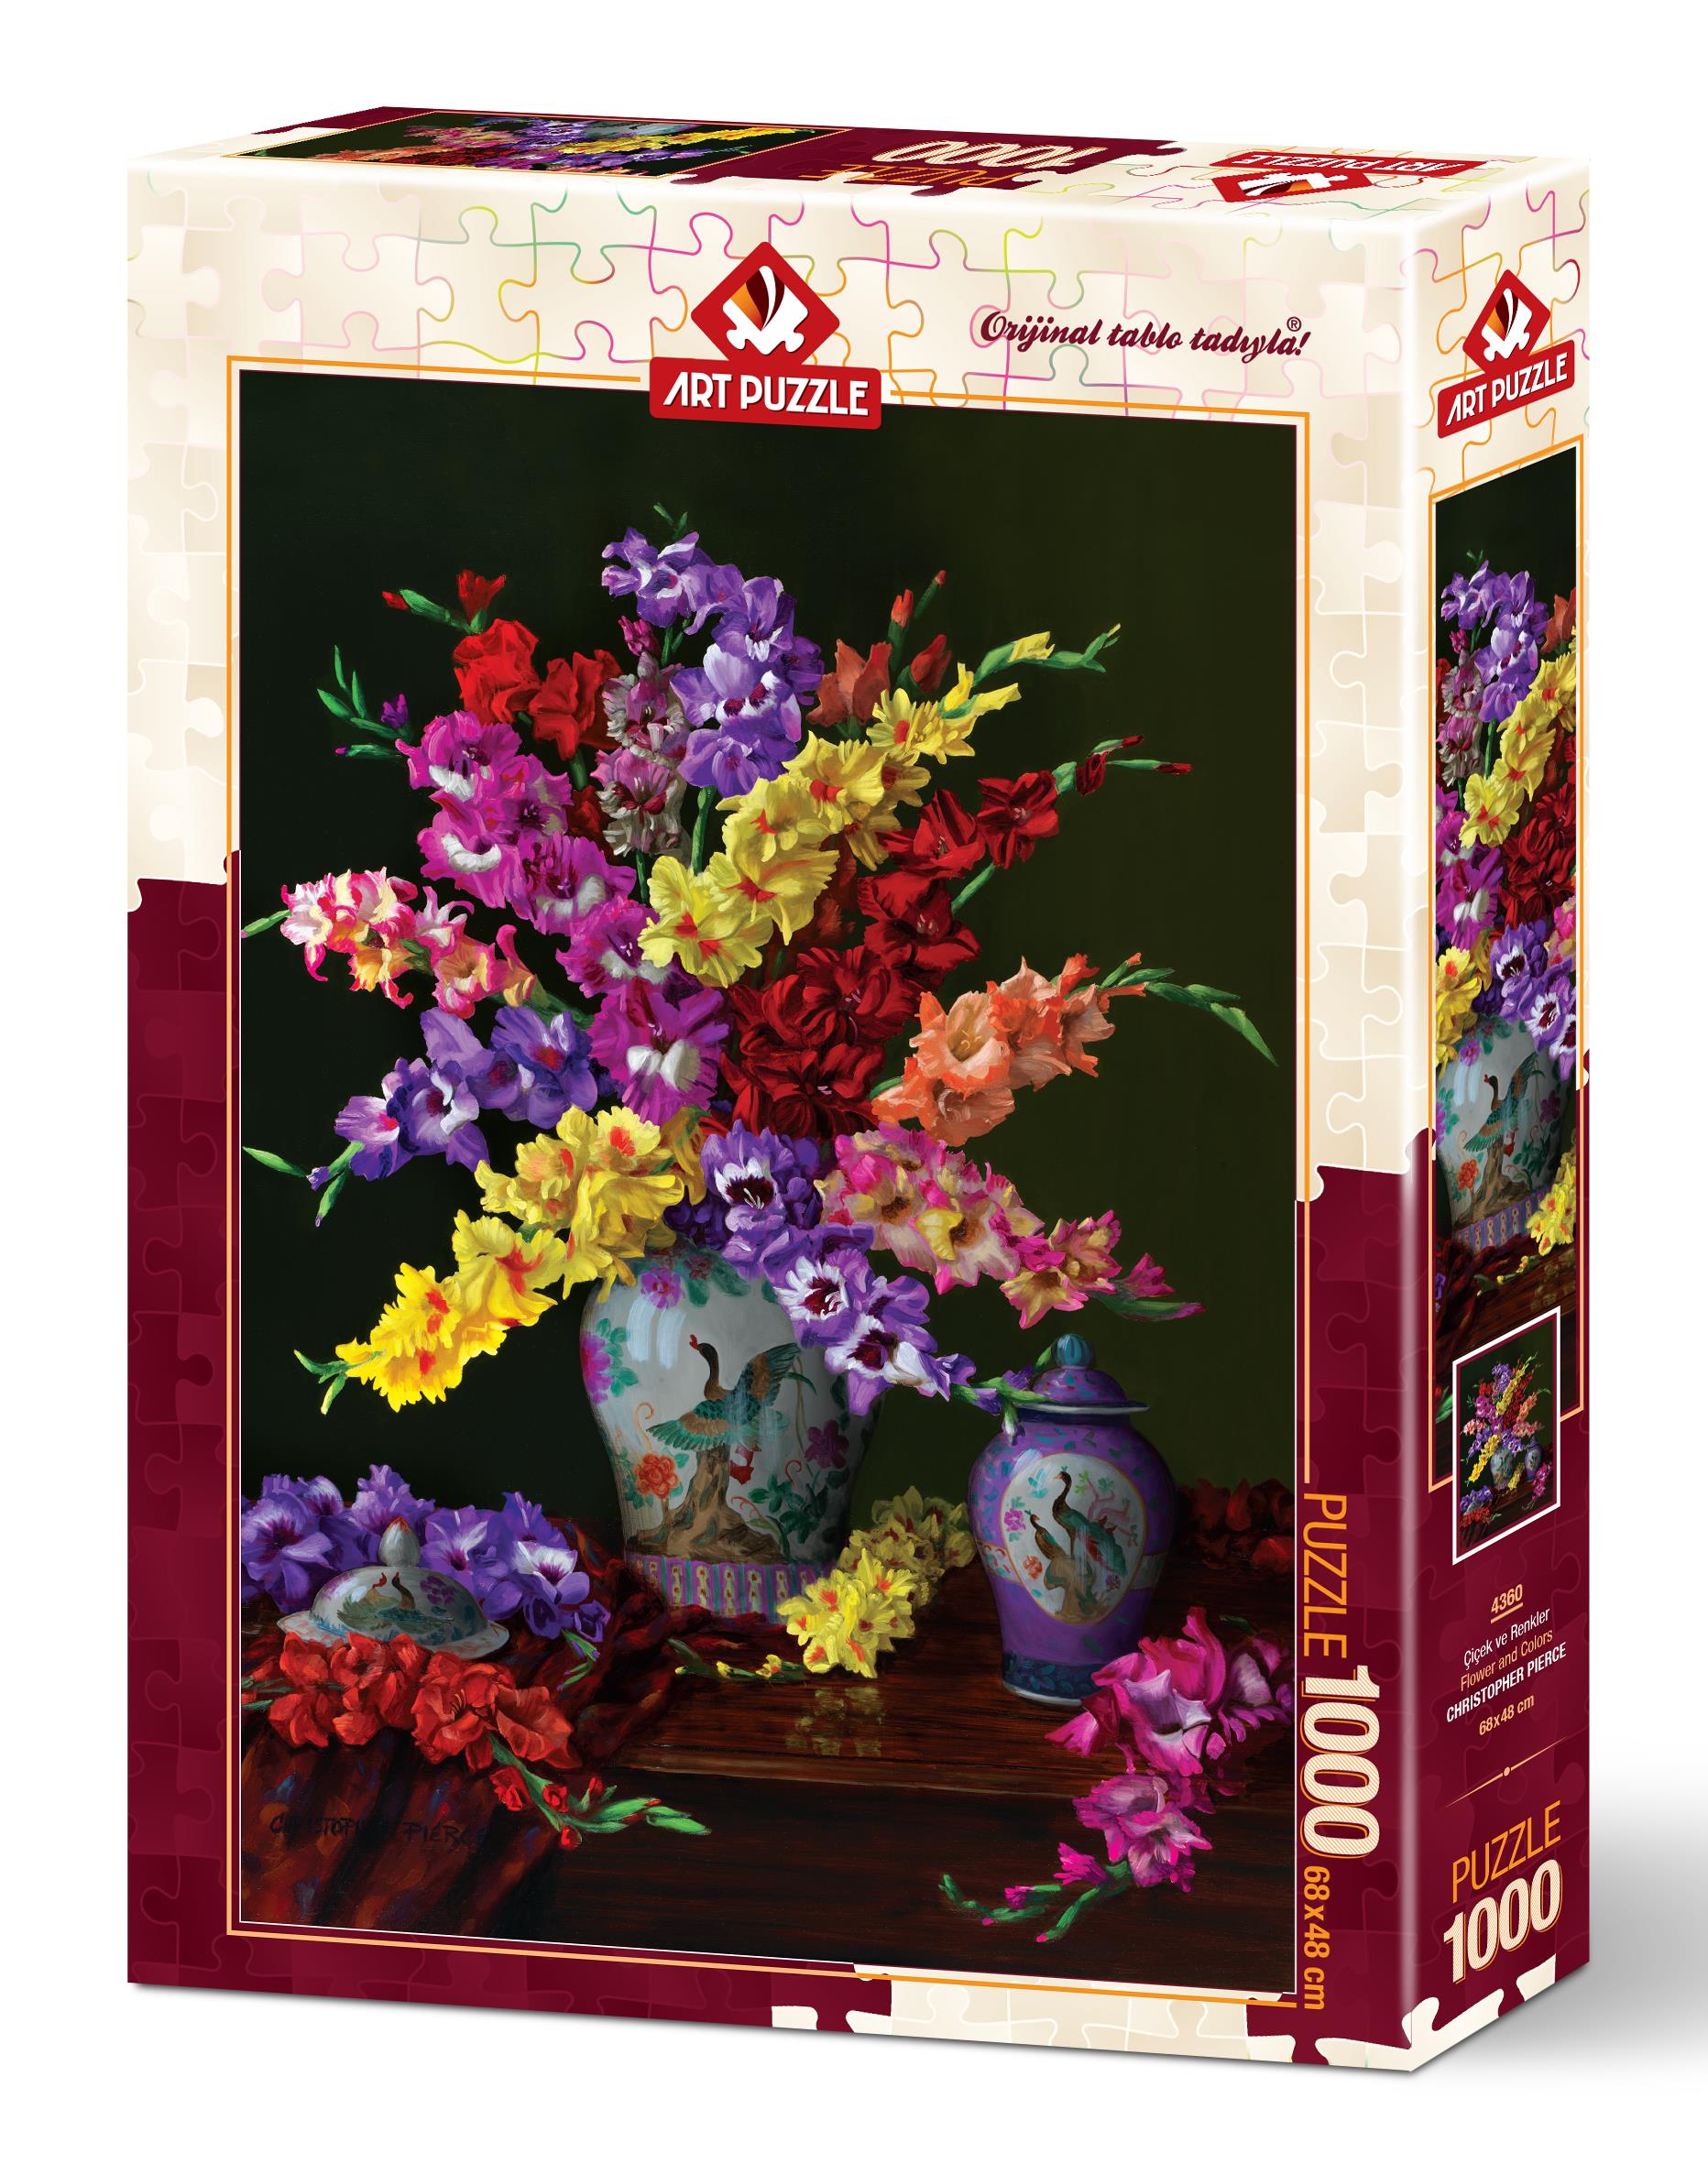 Art Puzzle 4360 Çiçek Ve Renkler 1000 Parça Puzzle